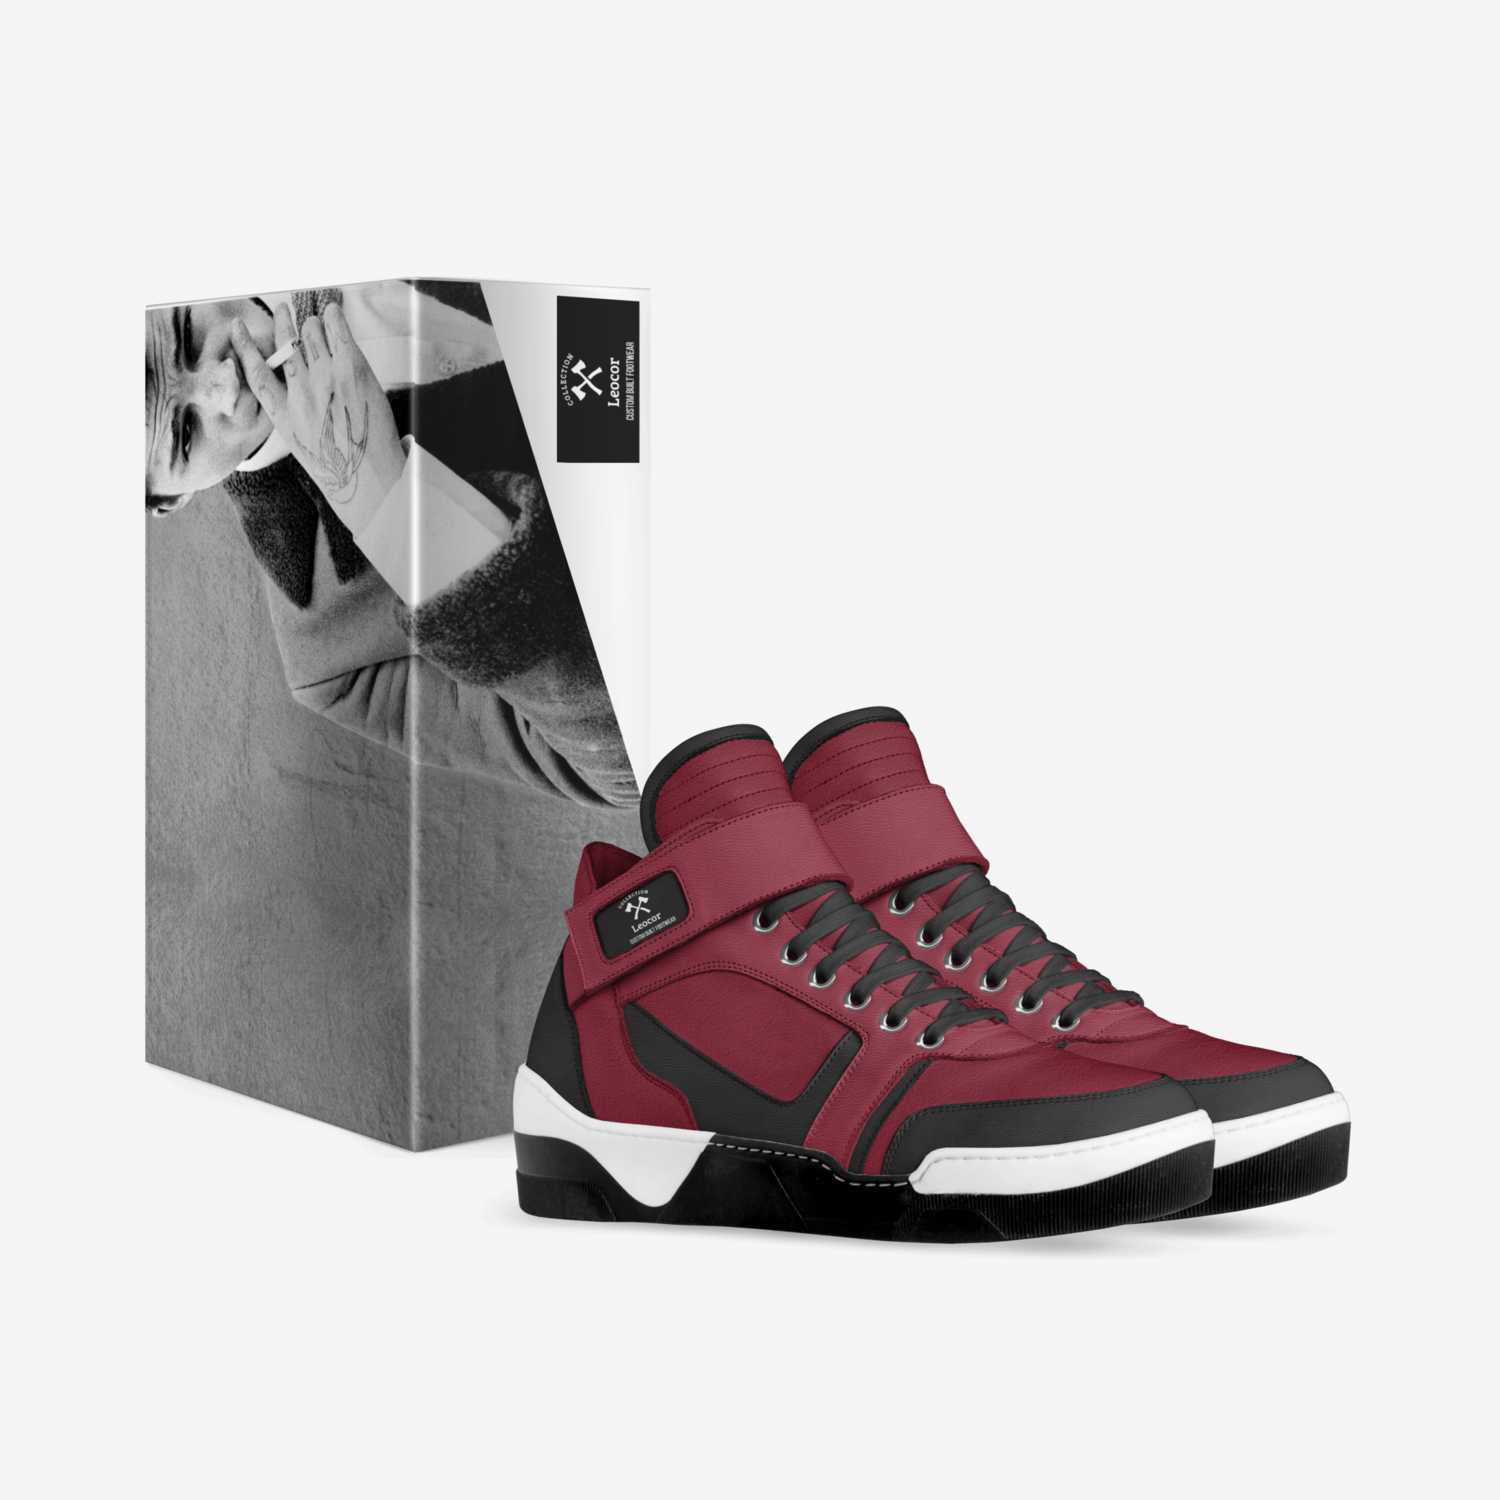 Leocor custom made in Italy shoes by Shacor Johnson | Box view